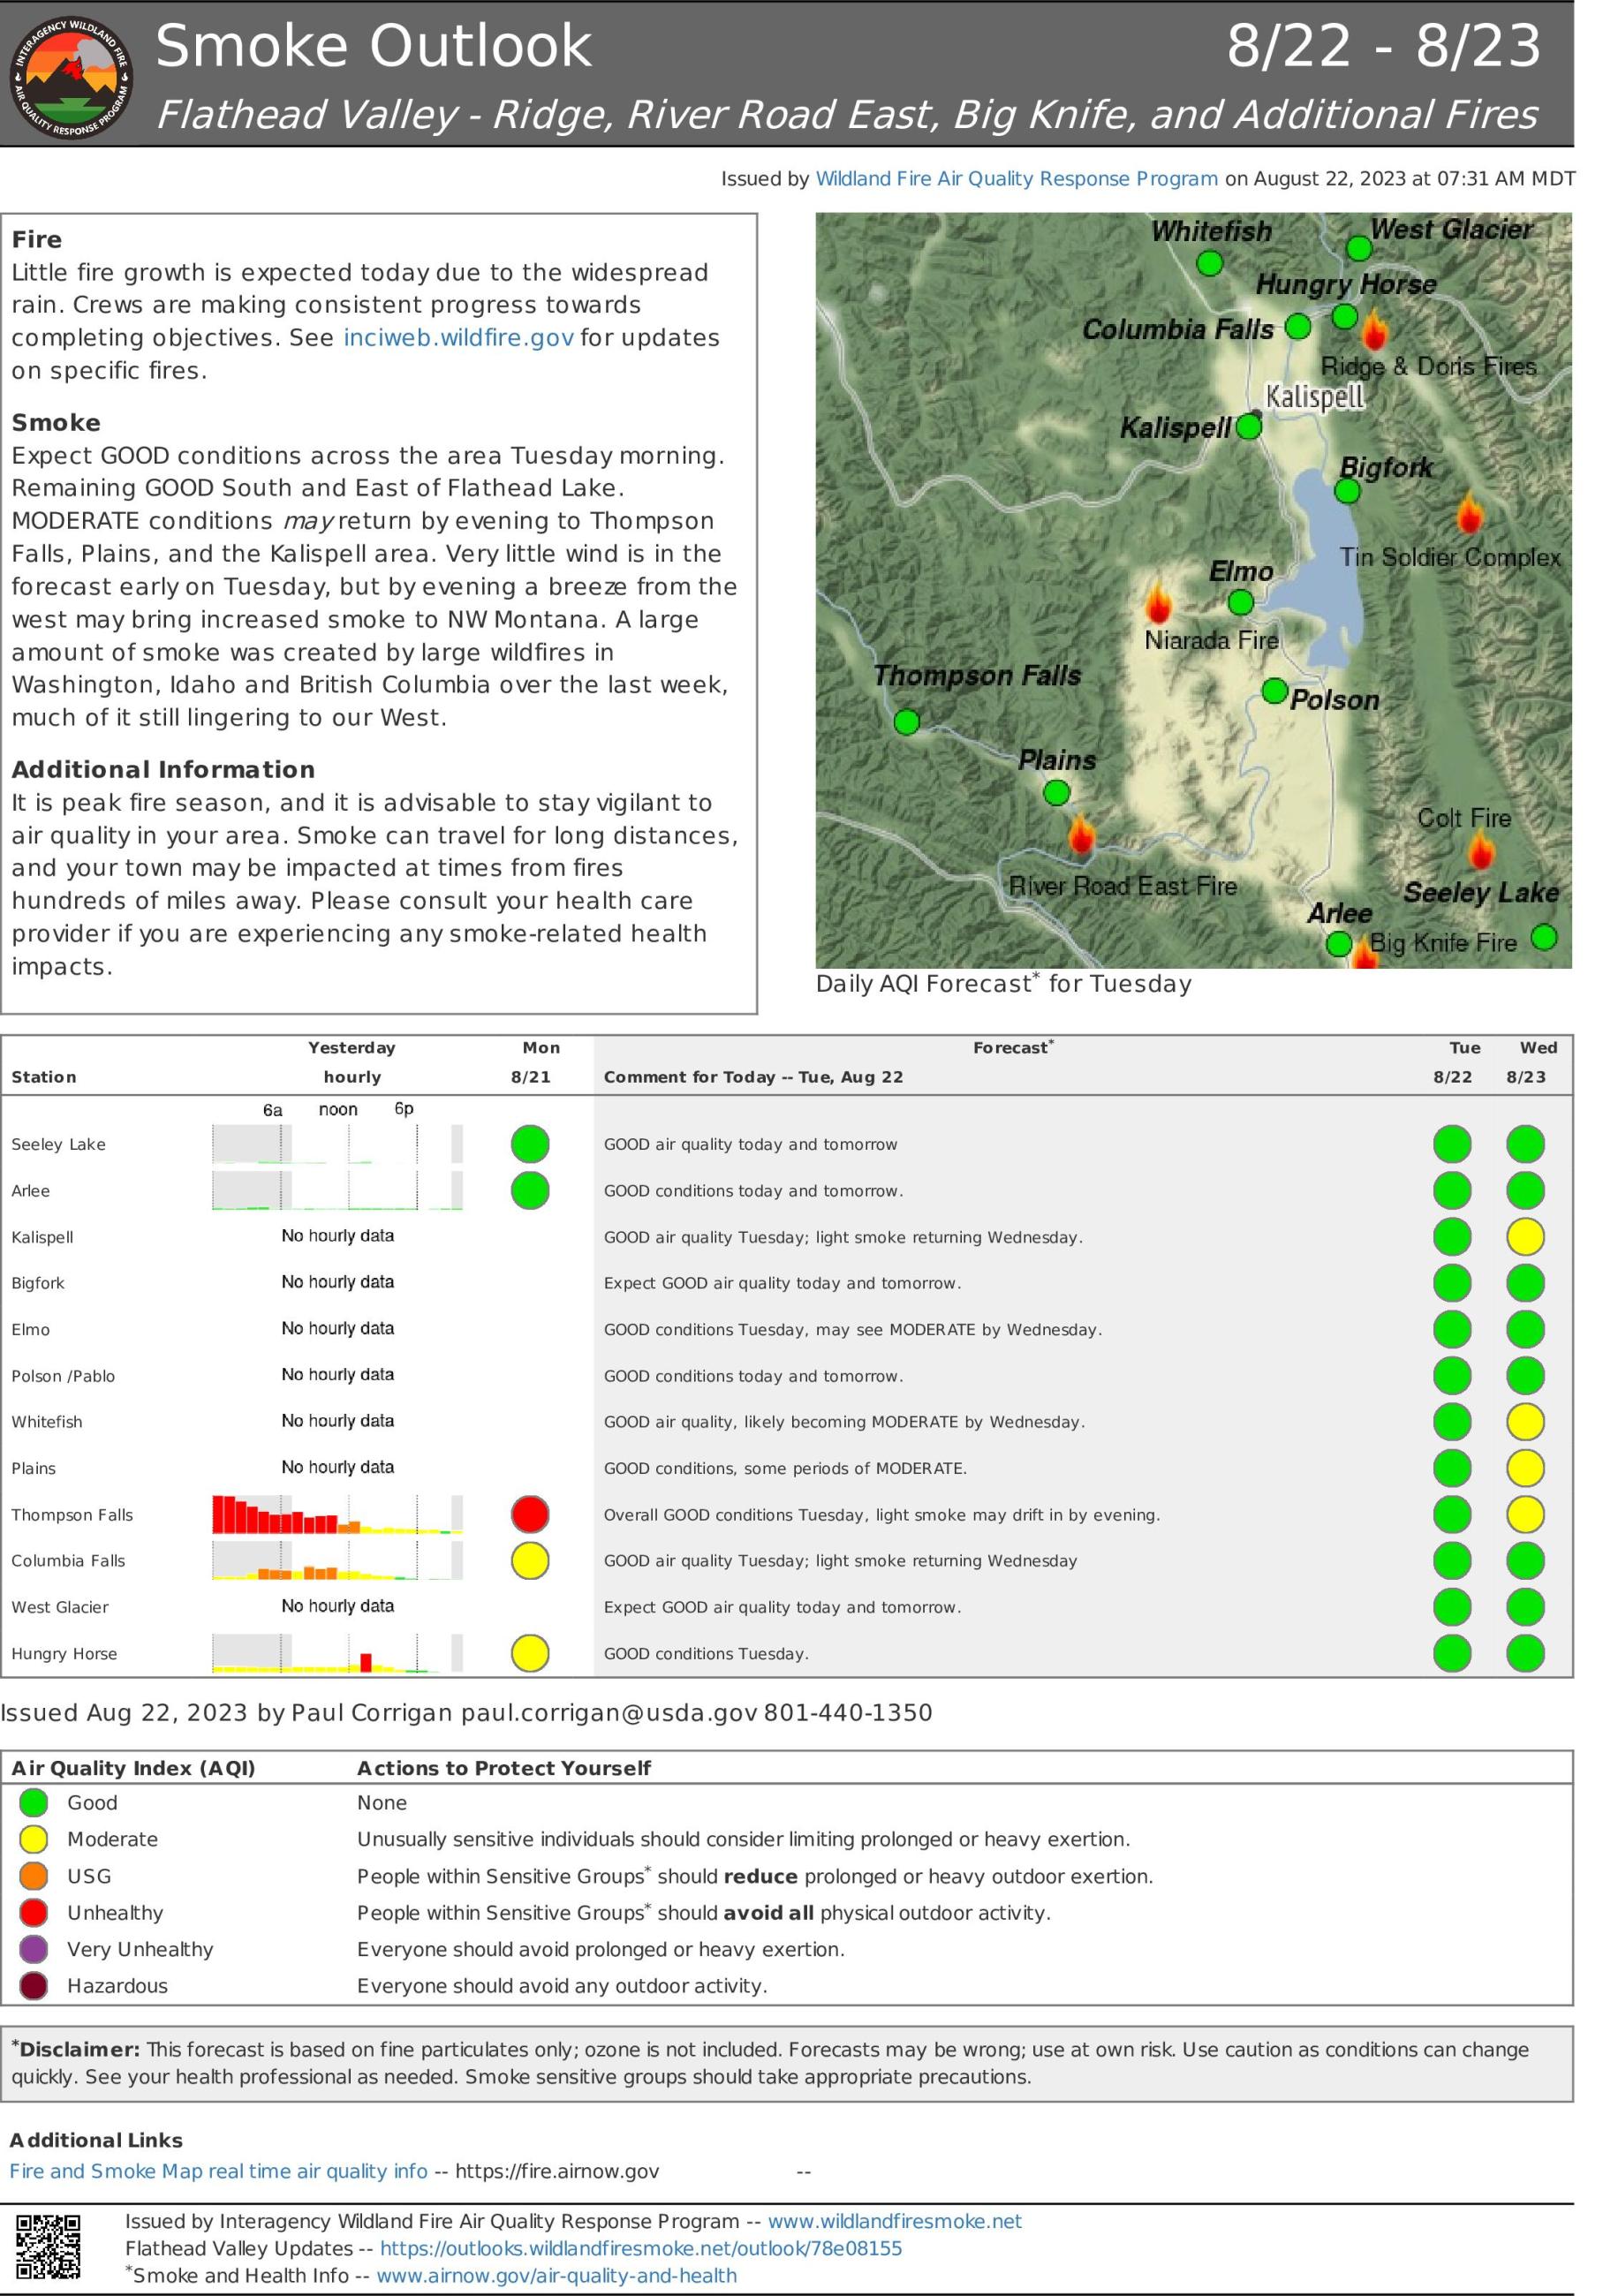 Flathead Valley Smoke Report - August 22, 2023